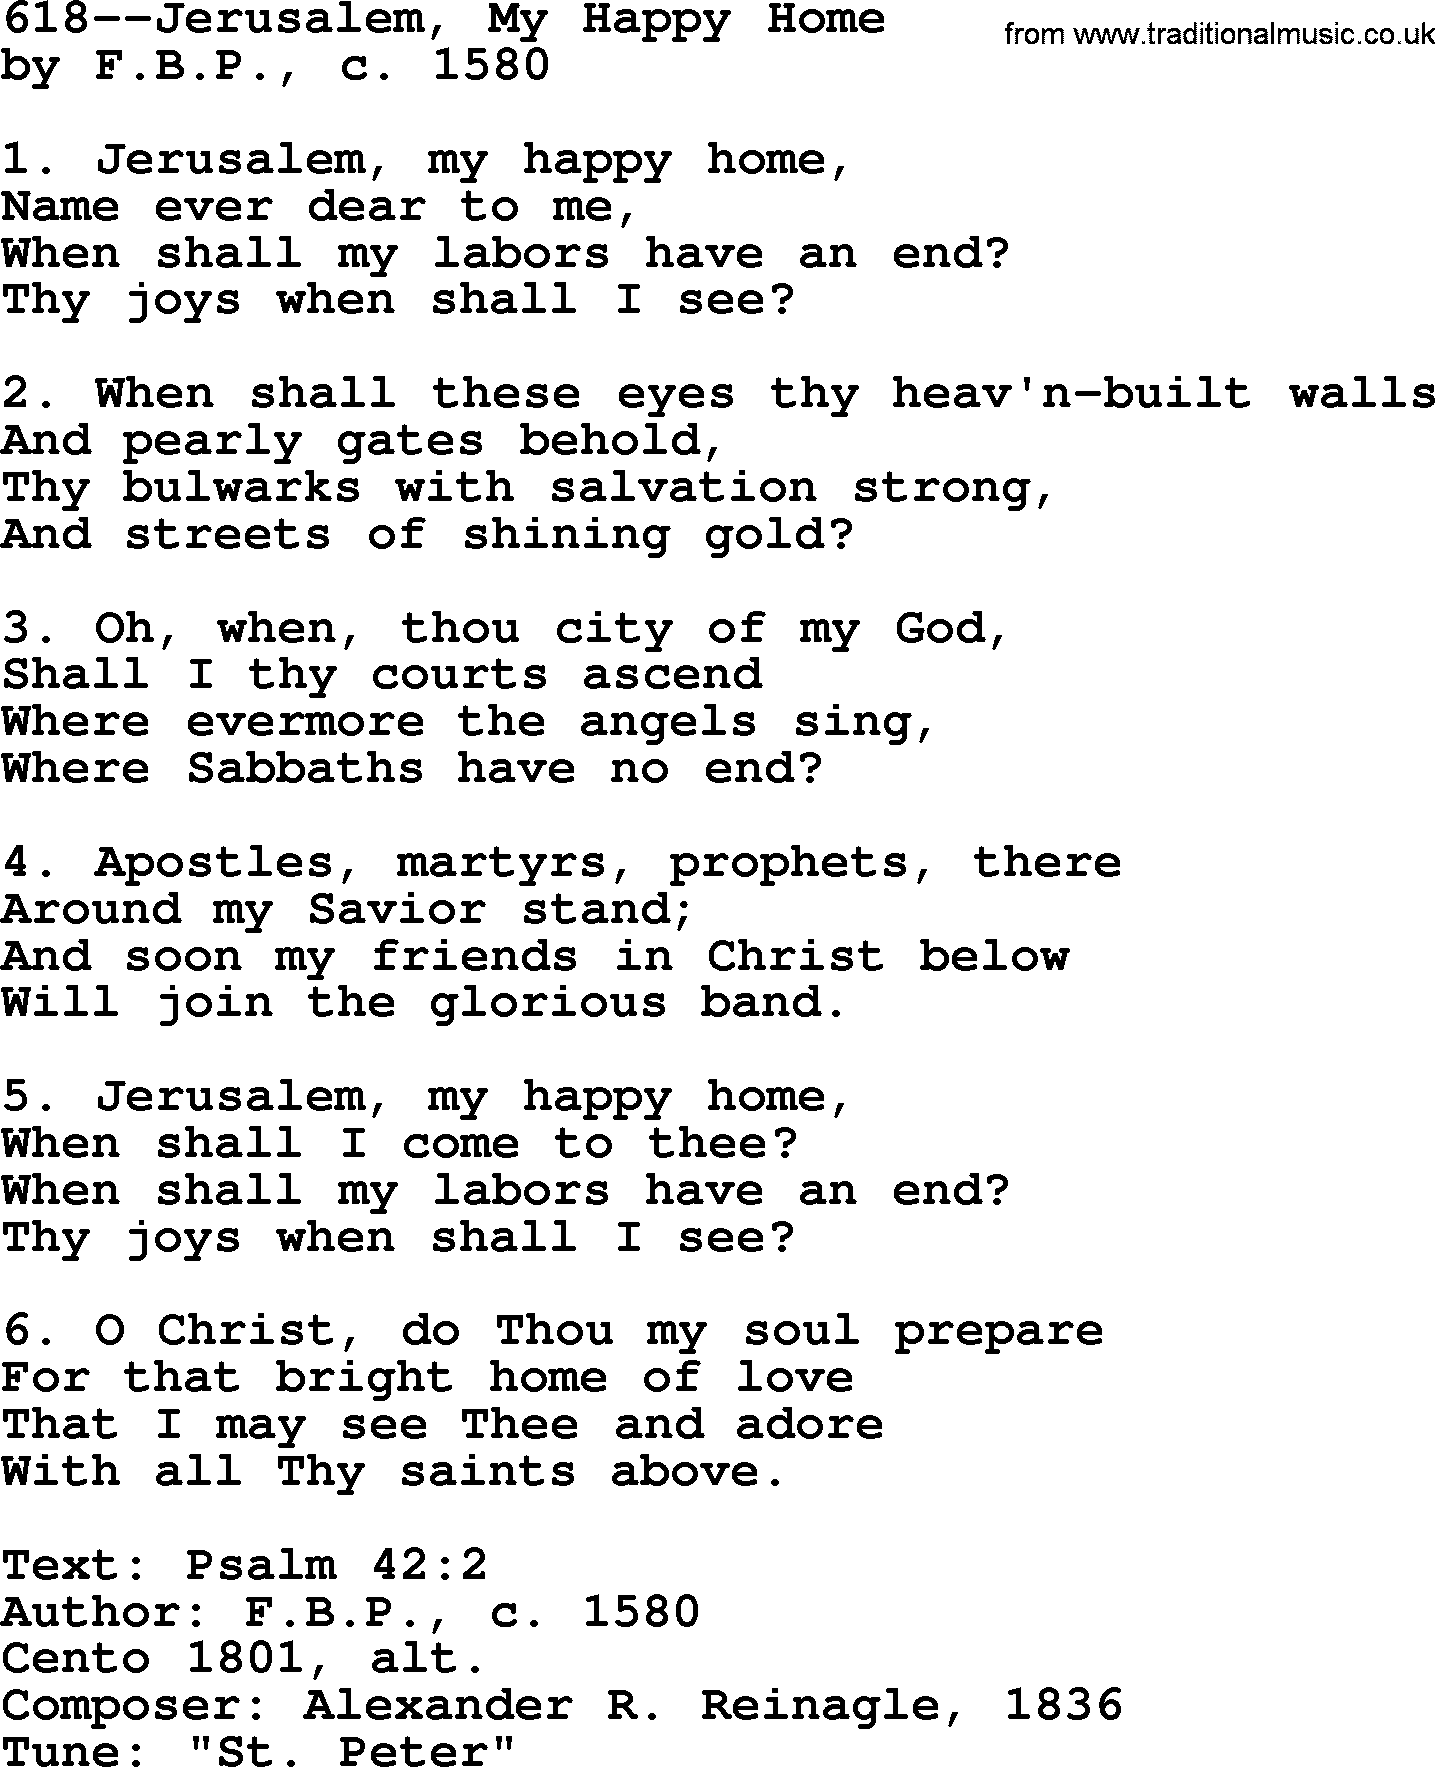 Lutheran Hymn: 618--Jerusalem, My Happy Home.txt lyrics with PDF